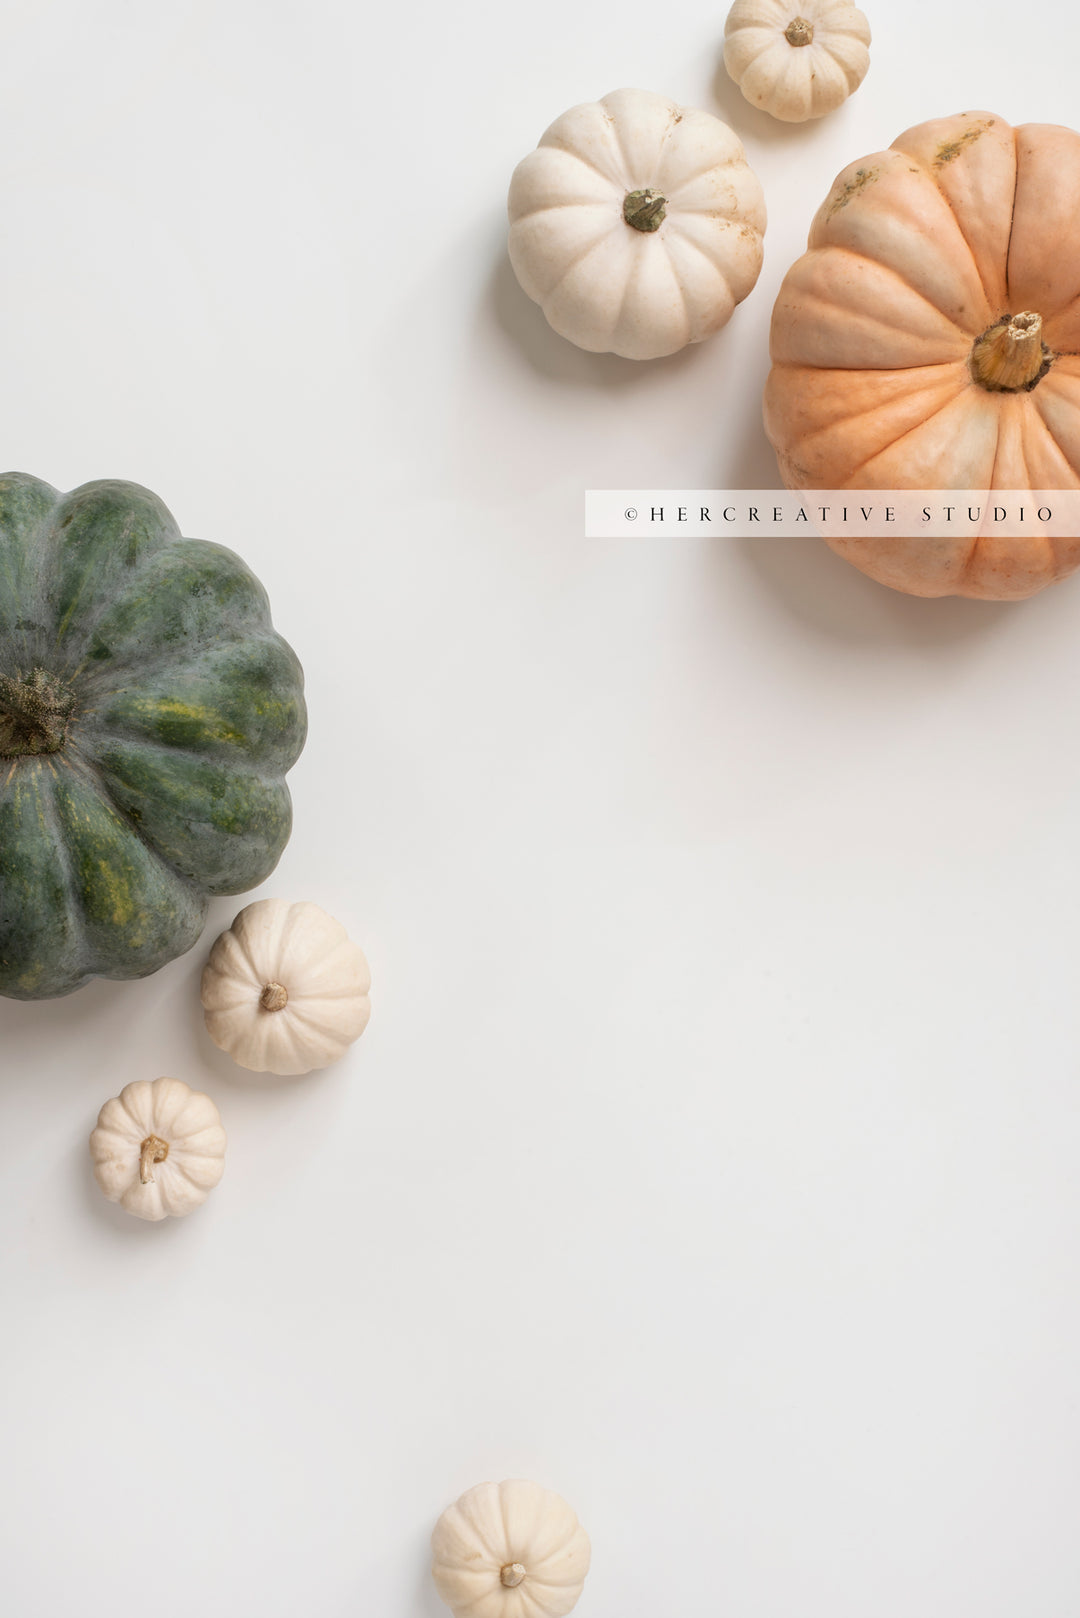 Pumpkins on White Background 7. Digital Stock Image.